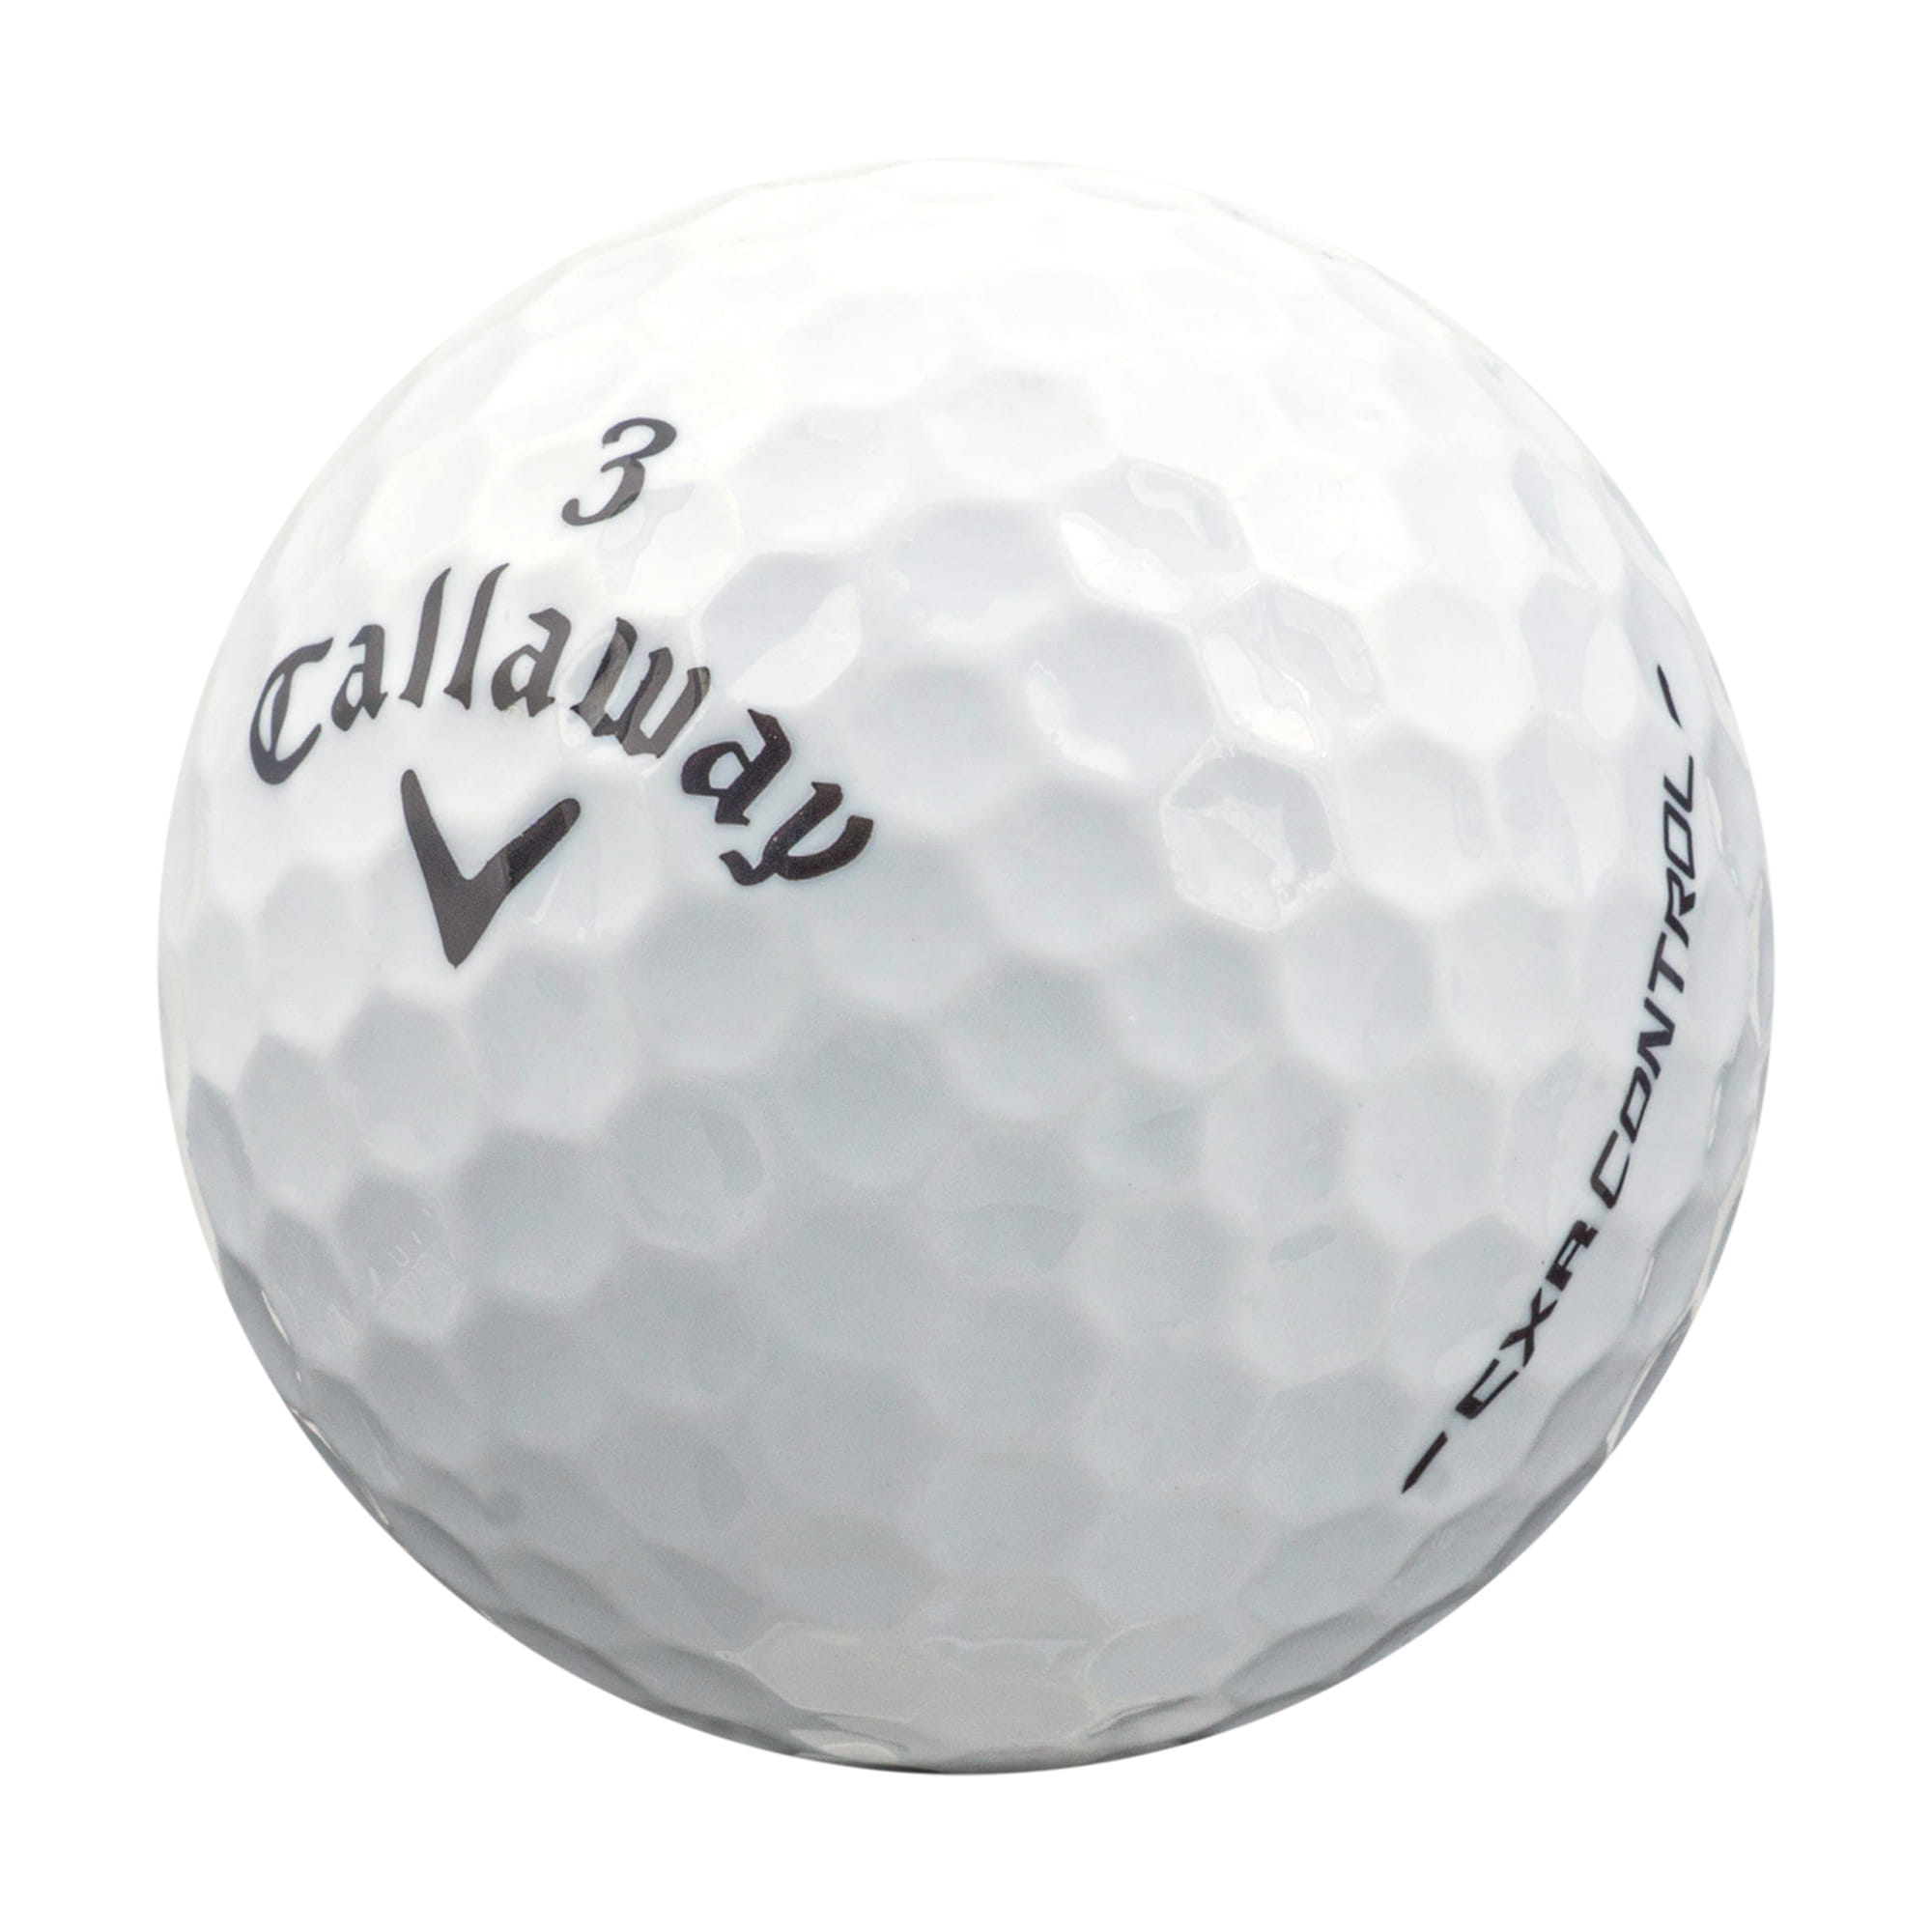 Callaway CXR Control Lake Balls | EASY LAKEBALLS UK - FIND YOUR GOLF BALL